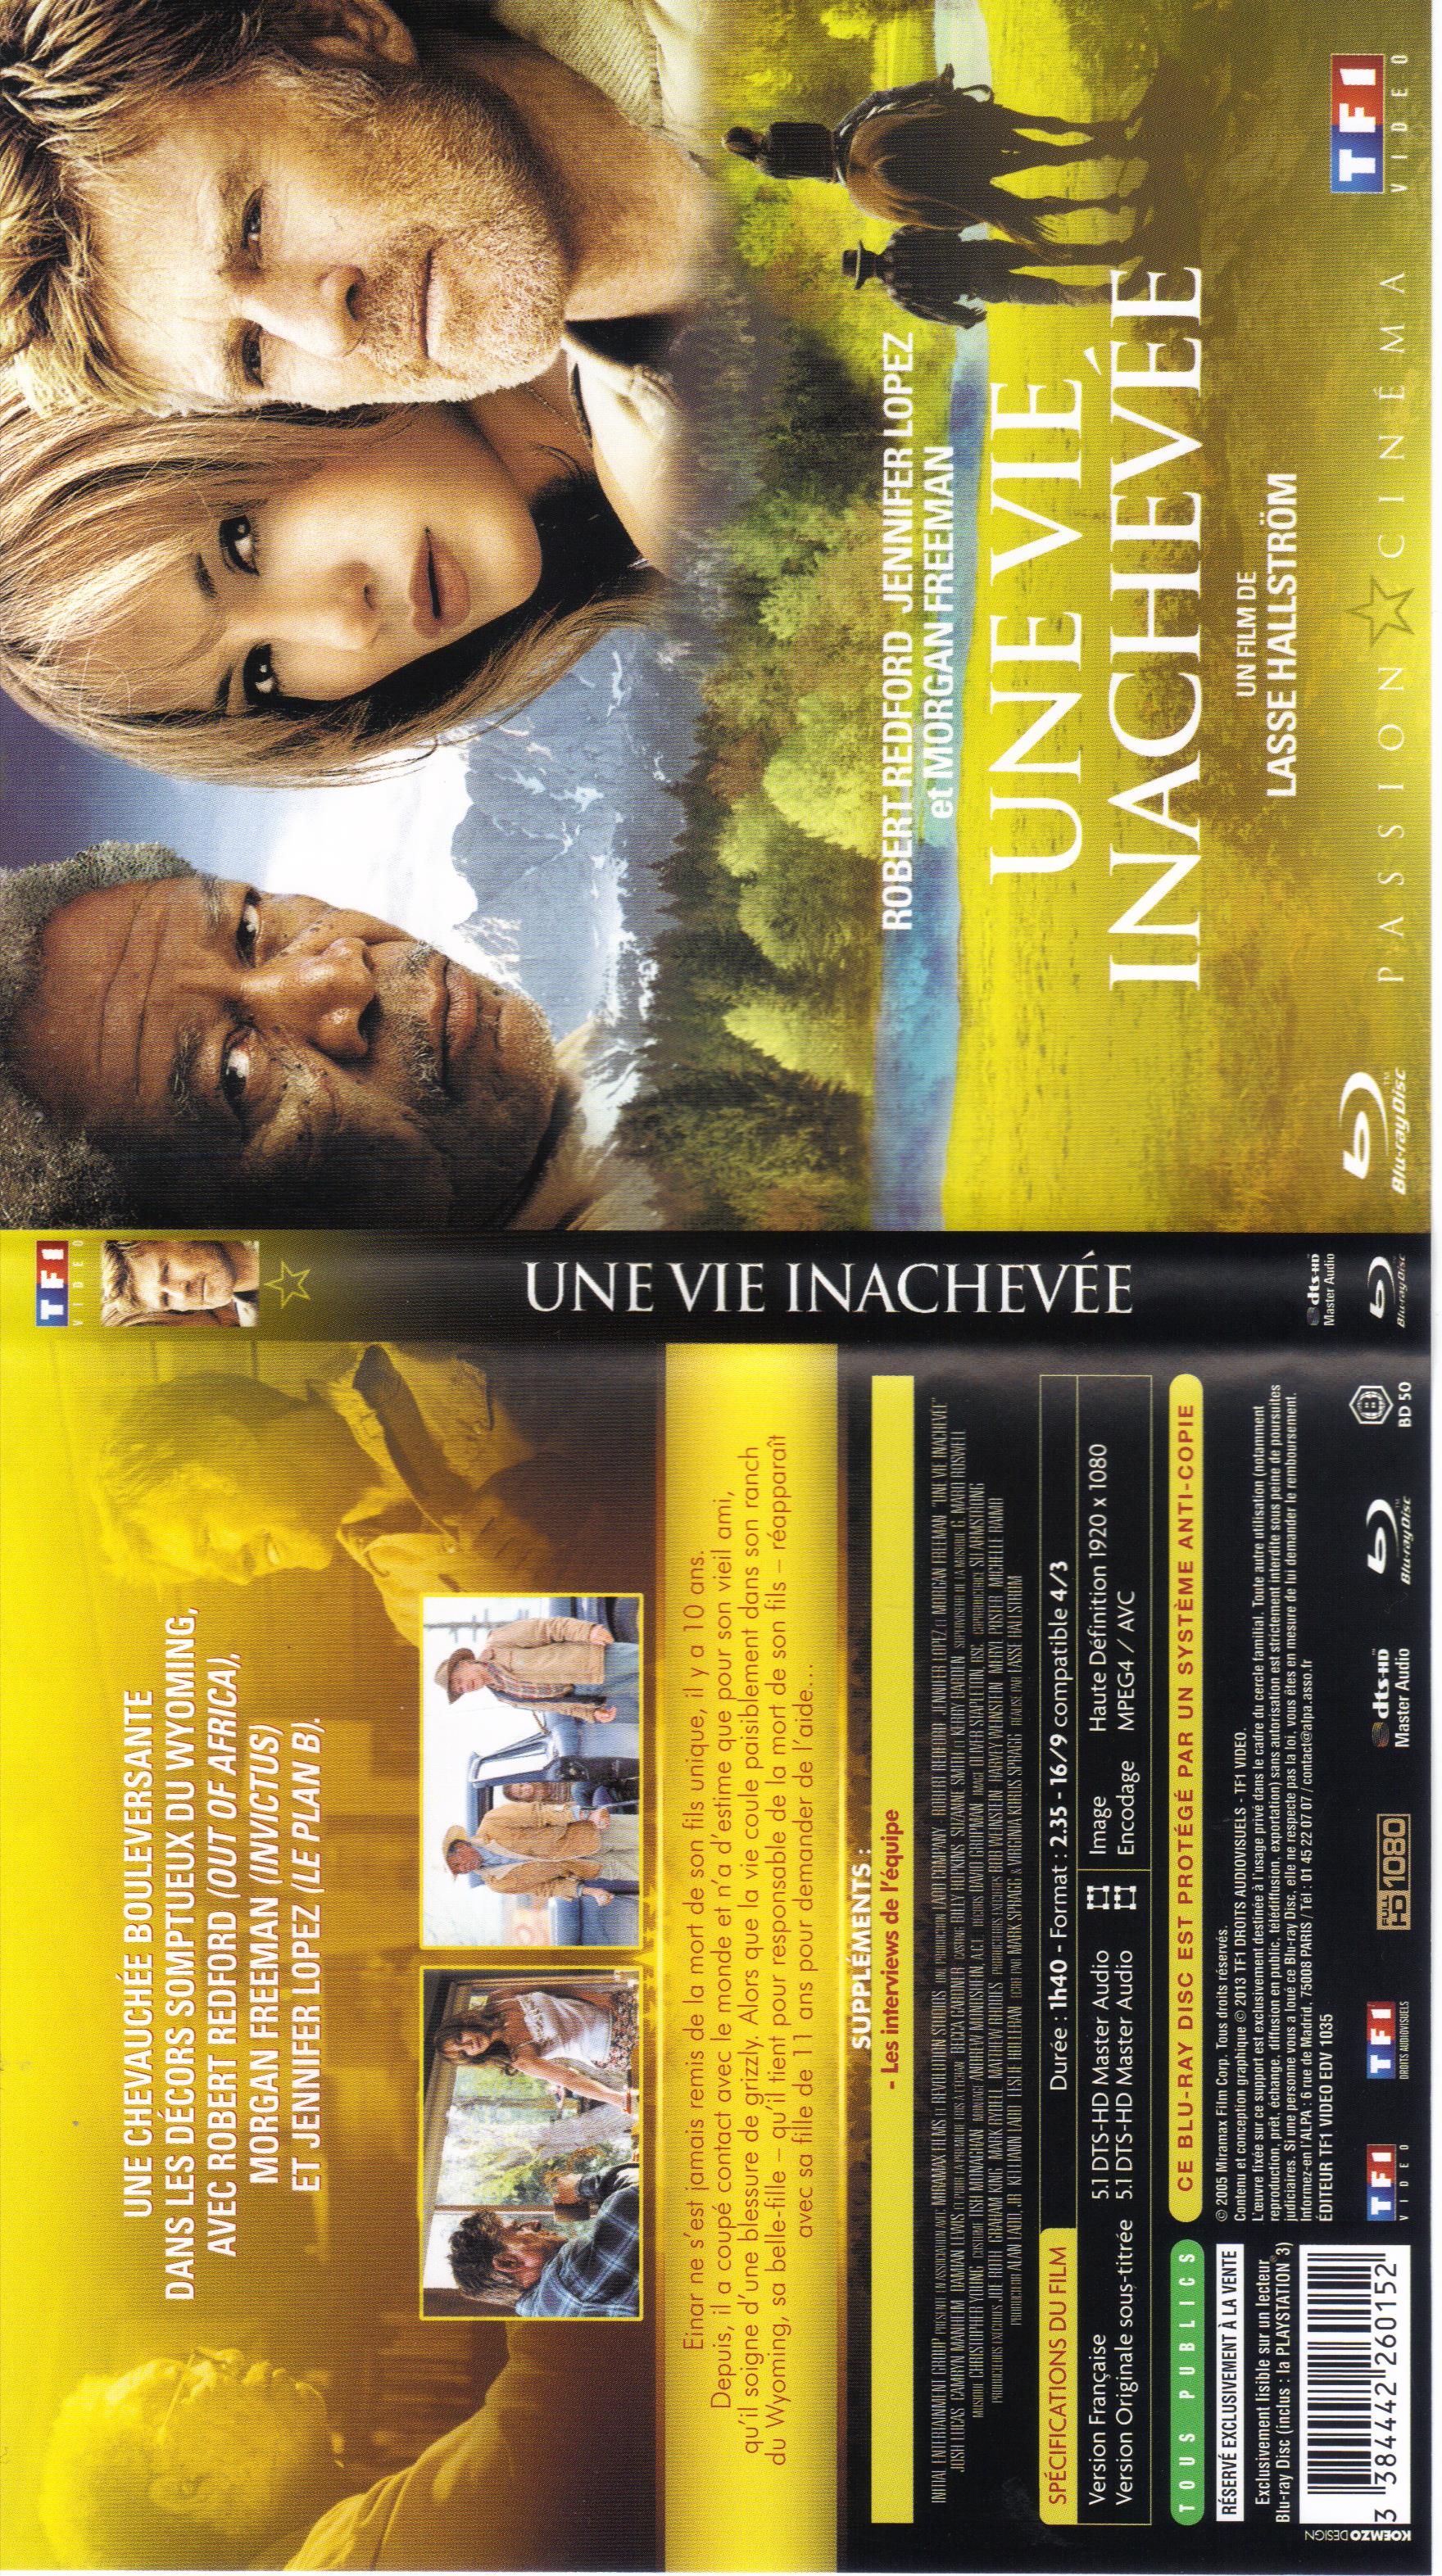 Jaquette DVD Une vie inacheve (BLU-RAY)